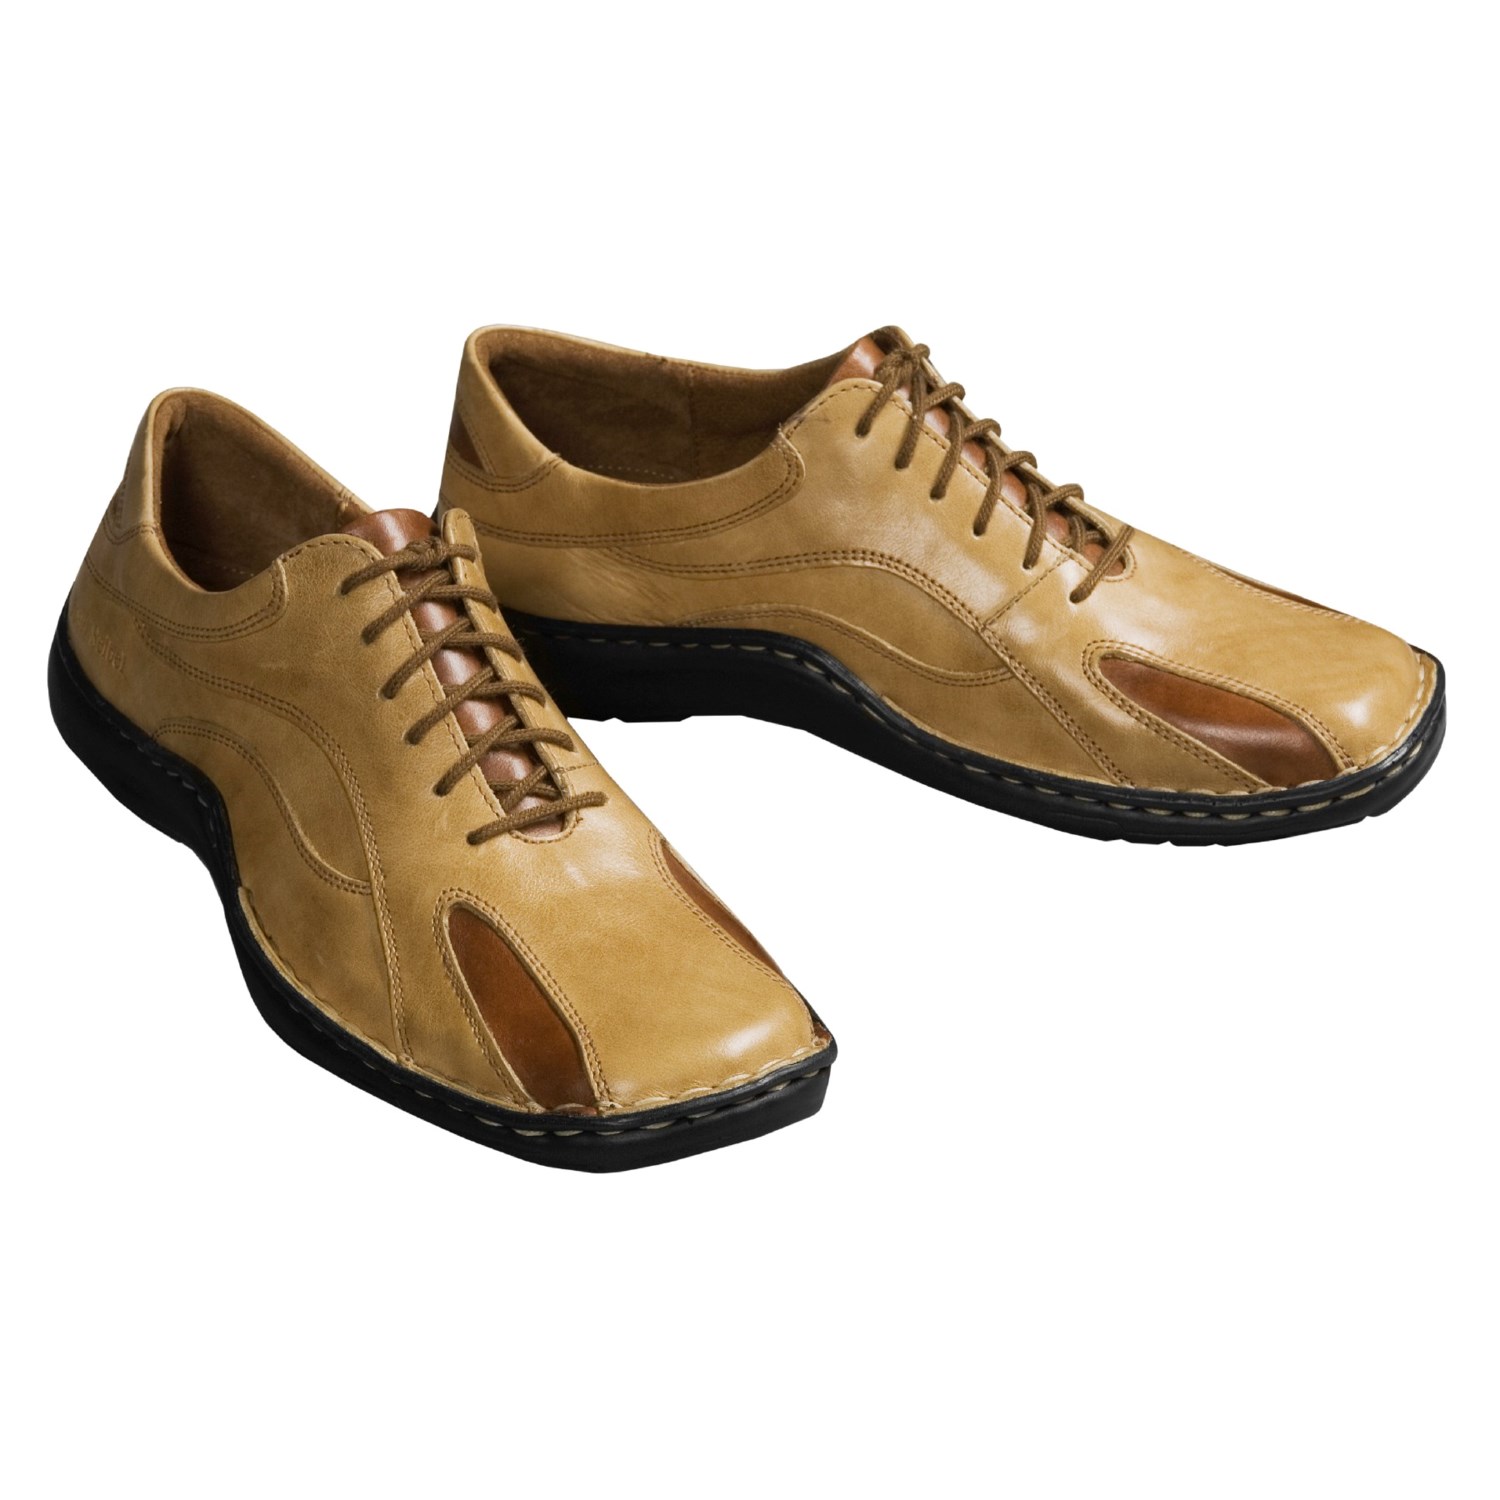 Josef Seibel Bowling Shoes (For Women) 78869 - Save 84%